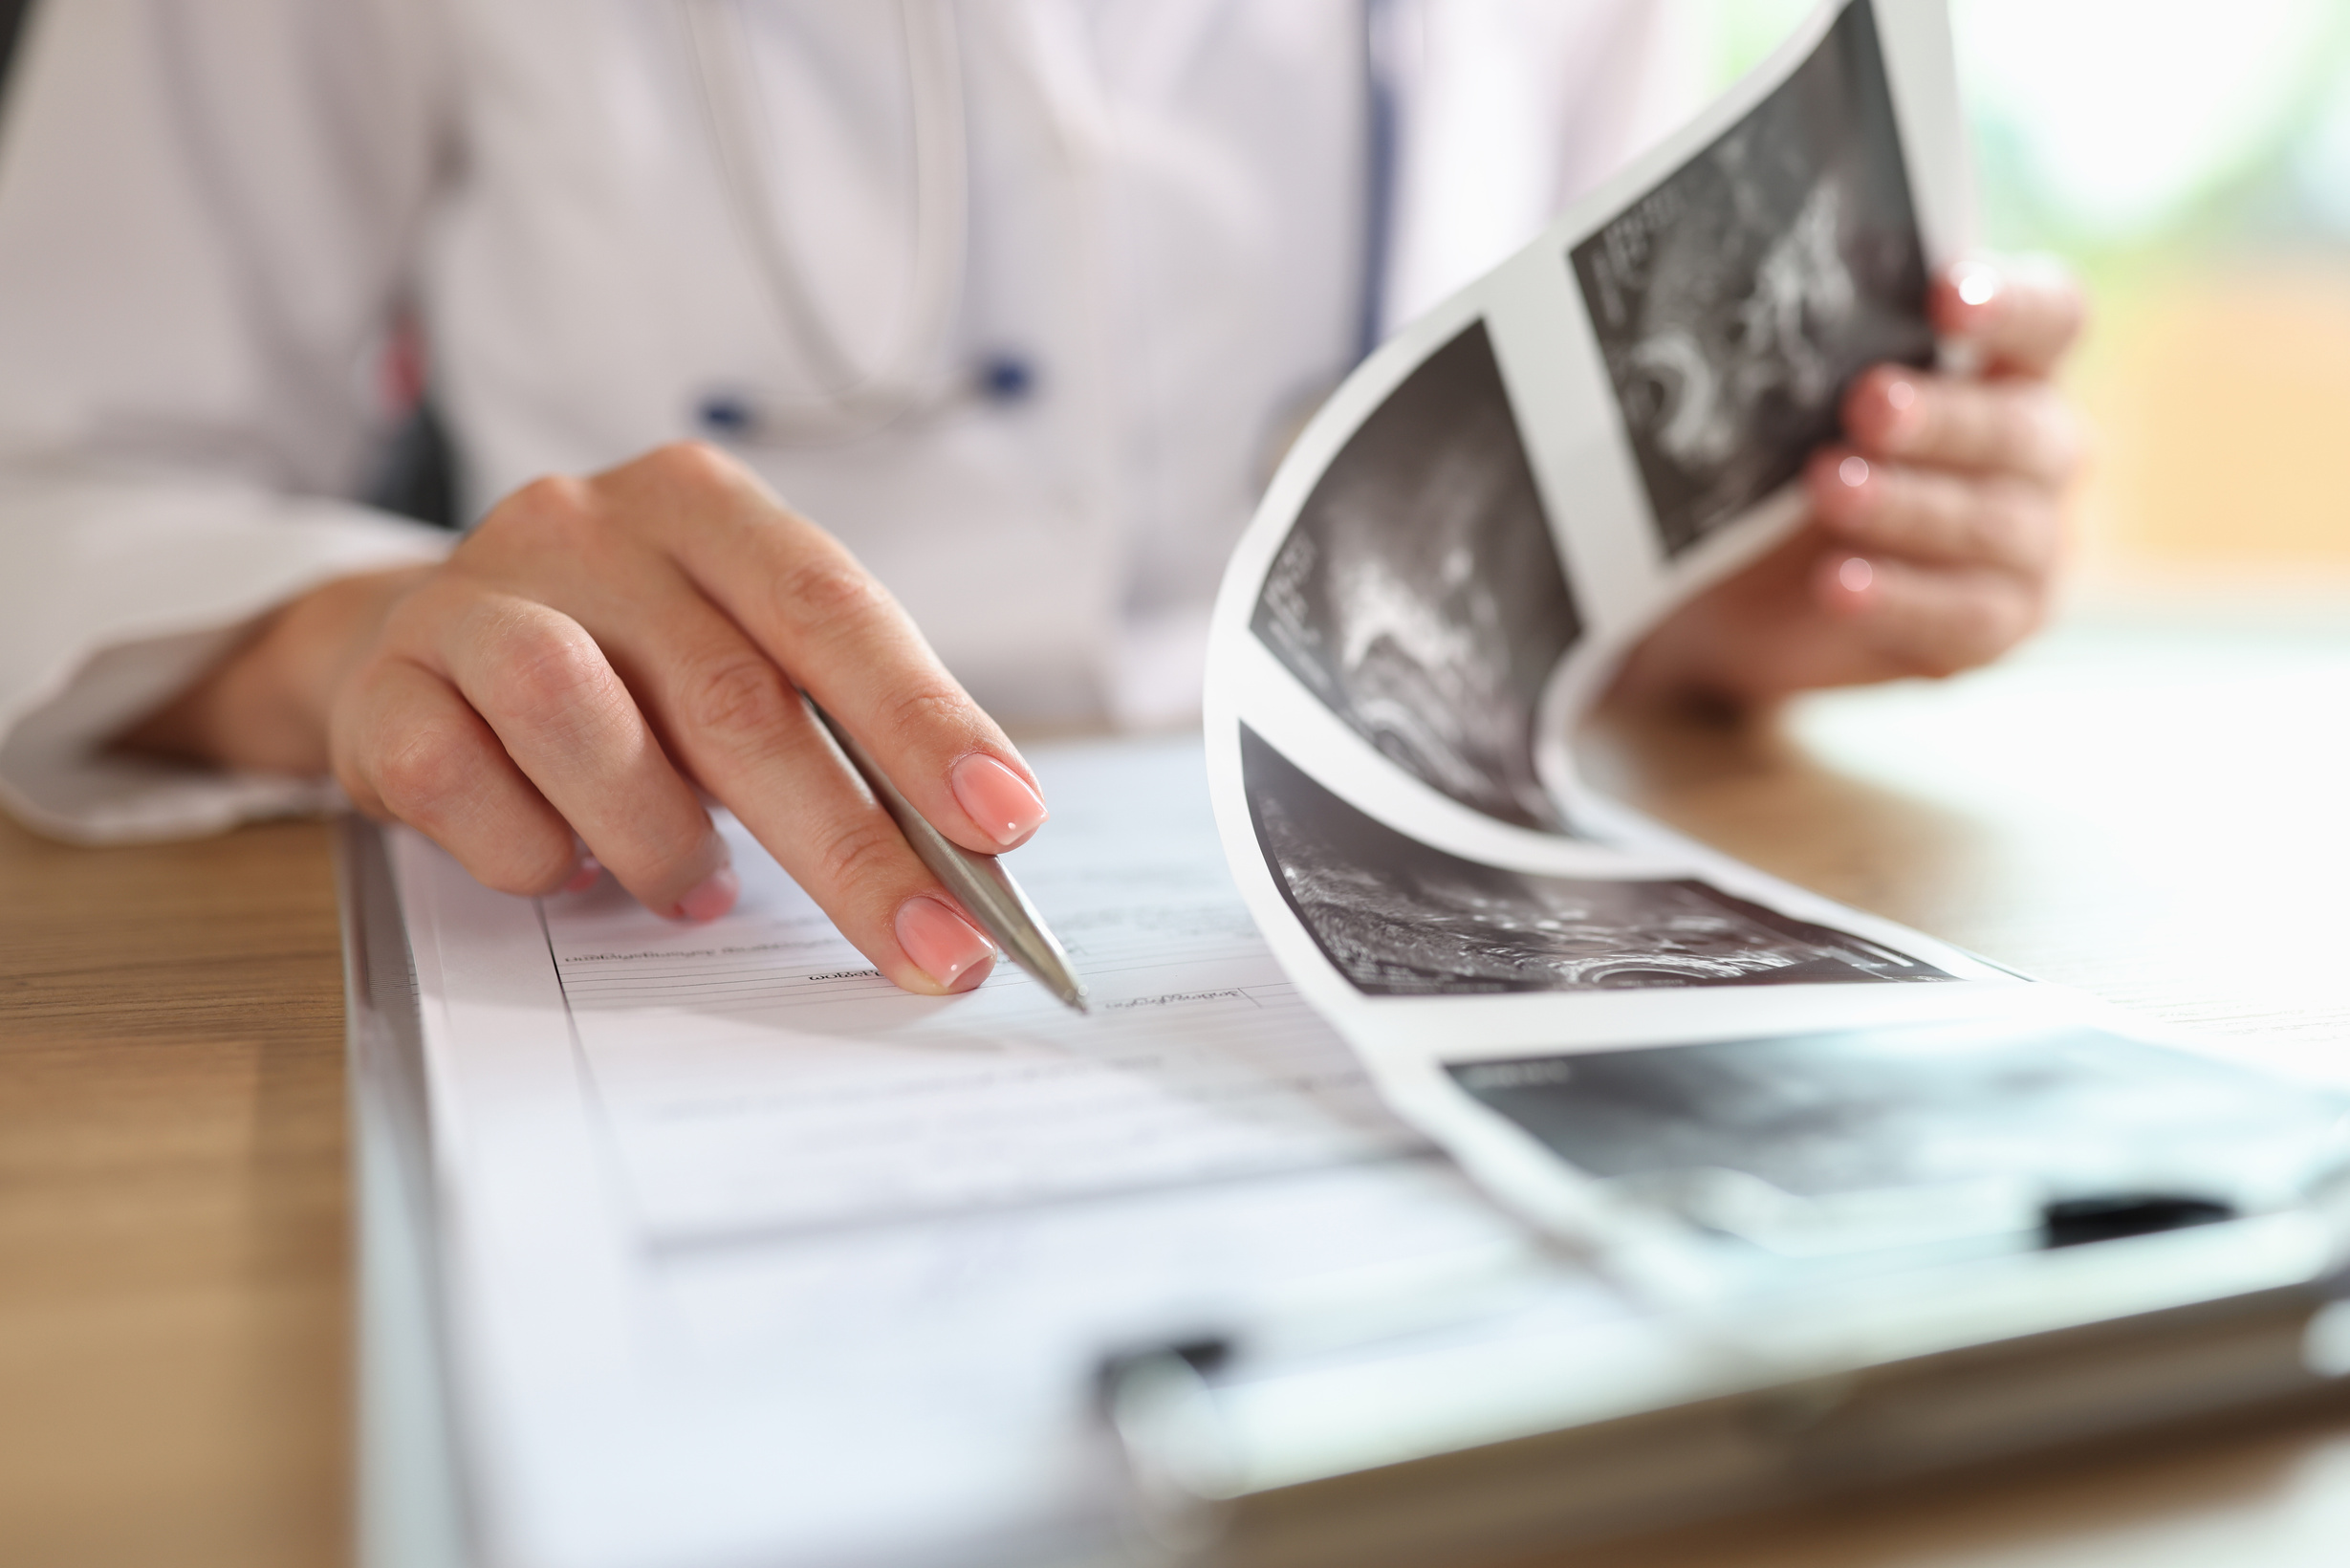 Gynecologist Examines Results of Examination of Uterus